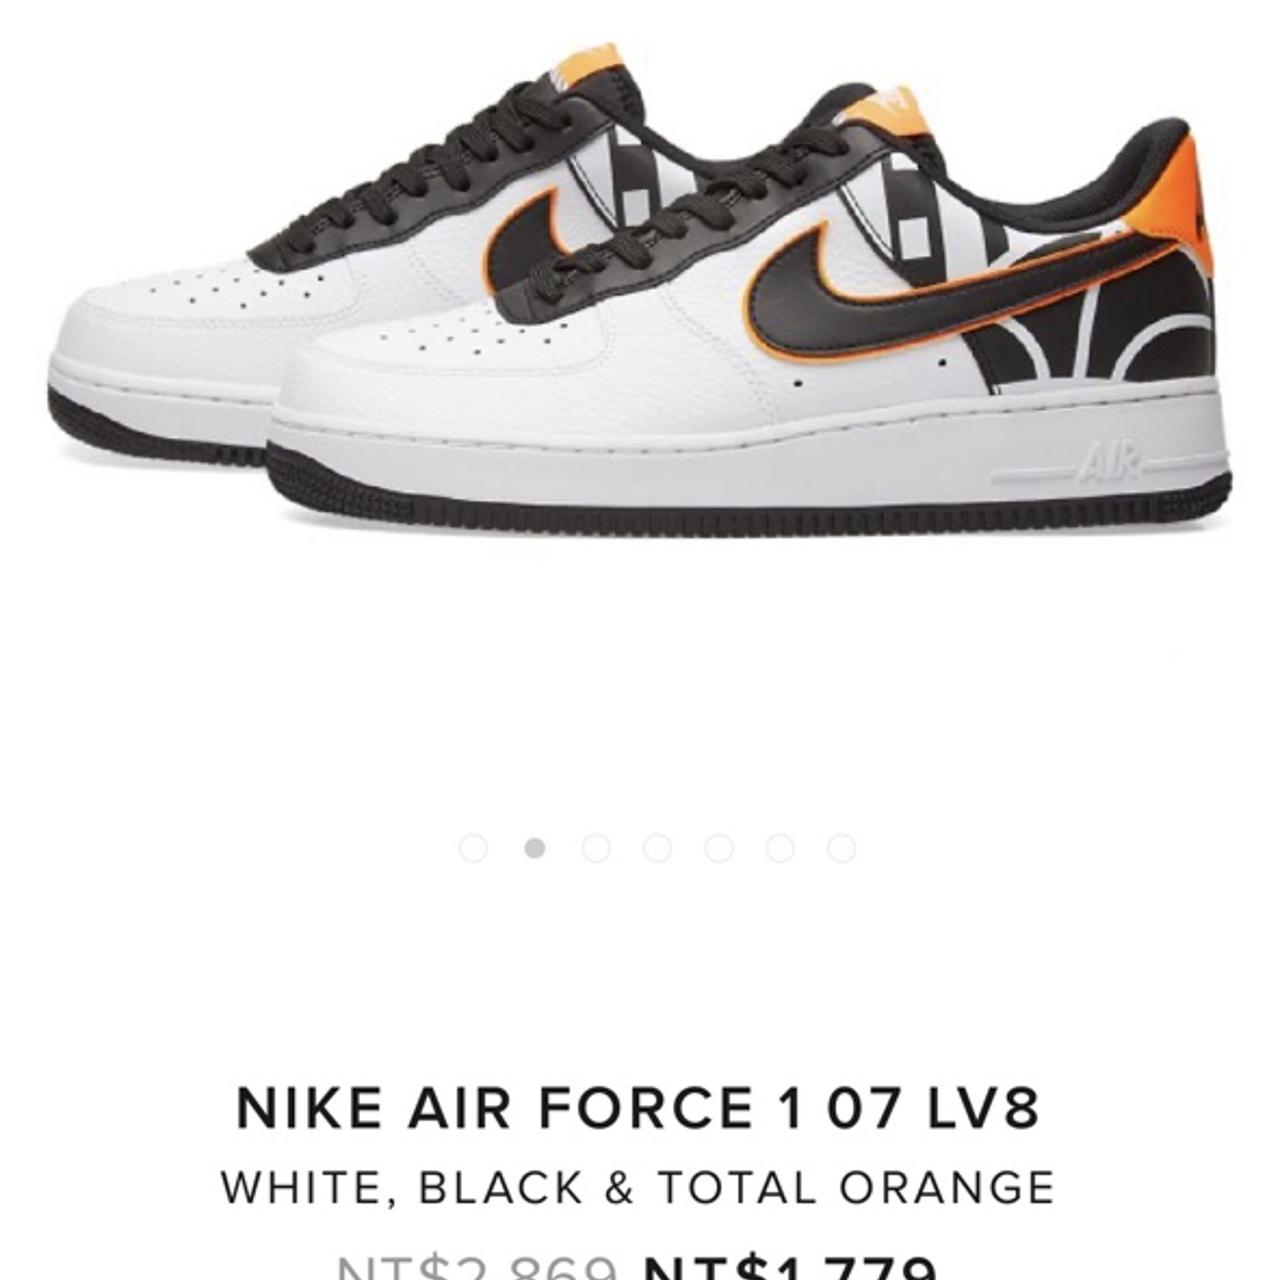 nike air force 1 orange and white and black